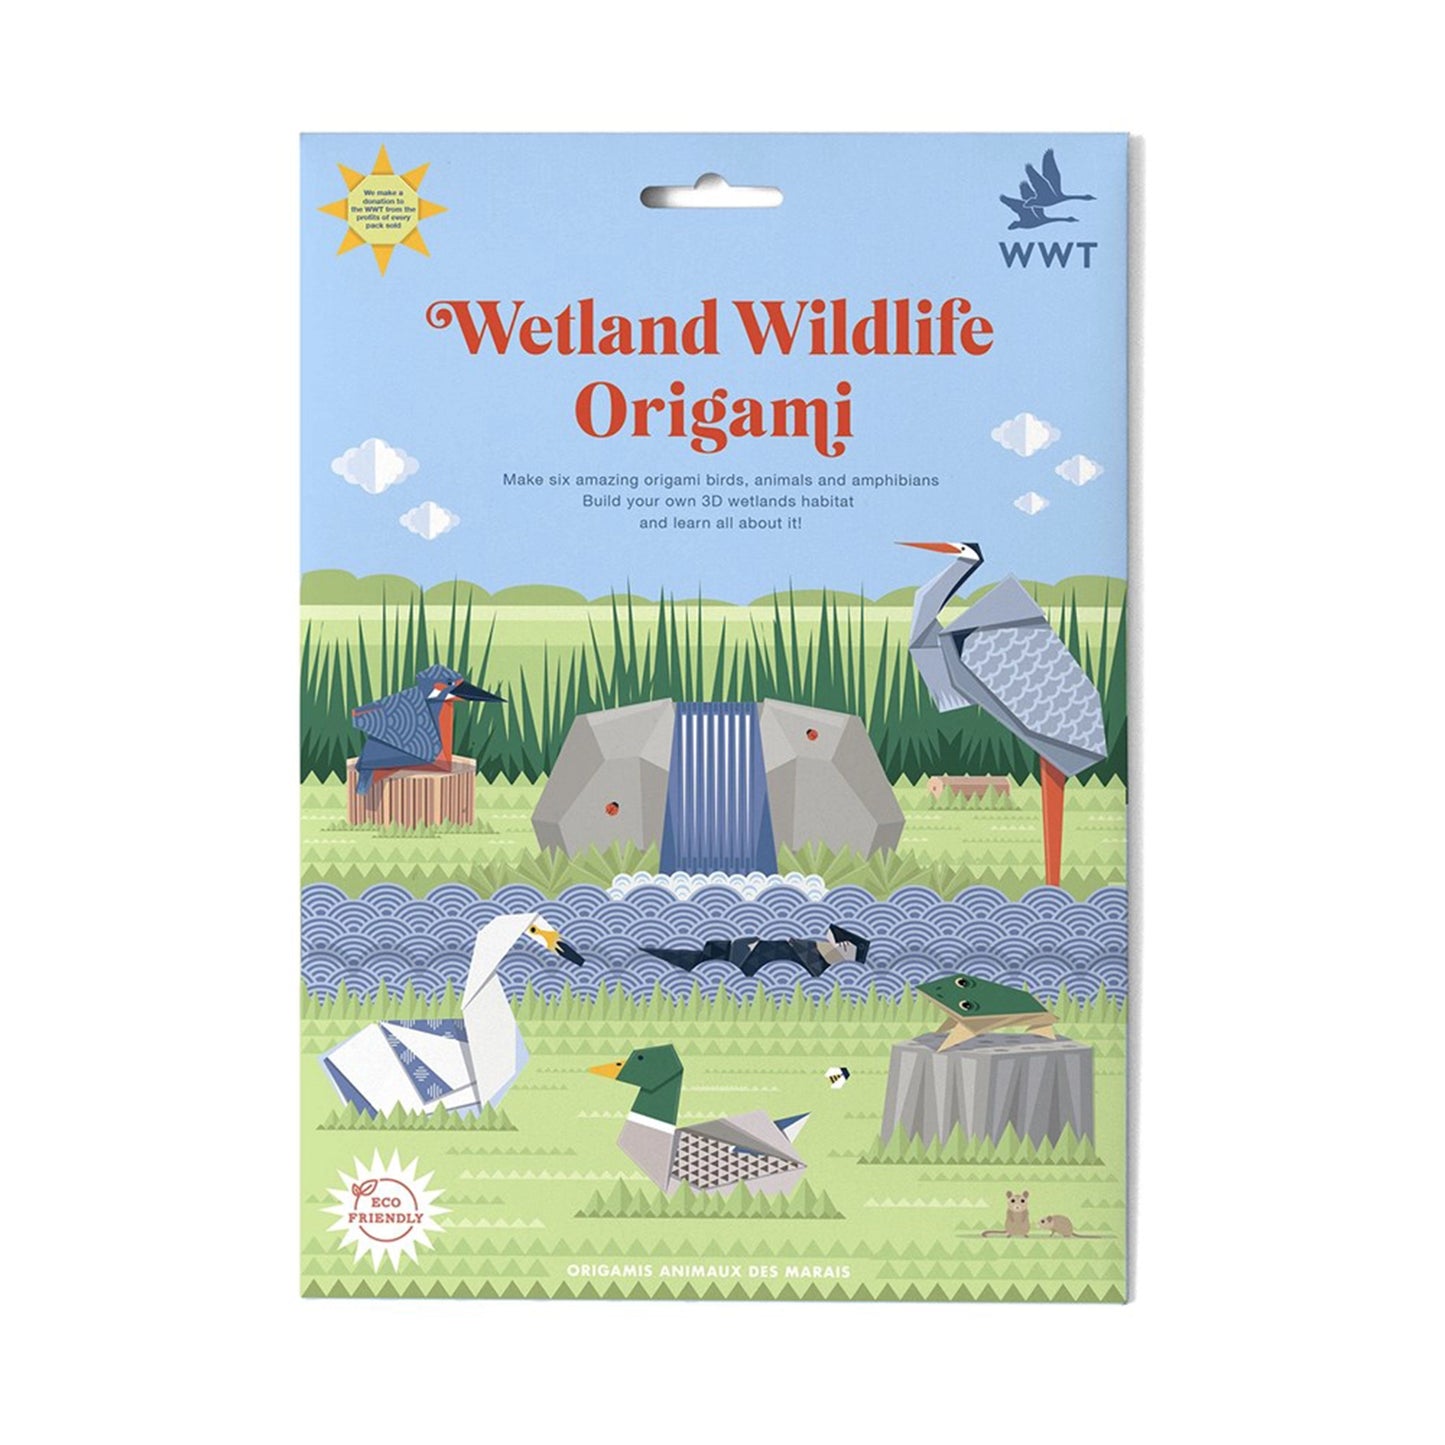 Wetland Wildlife Origami - Clockwork Soldier - The Forgotten Toy Shop